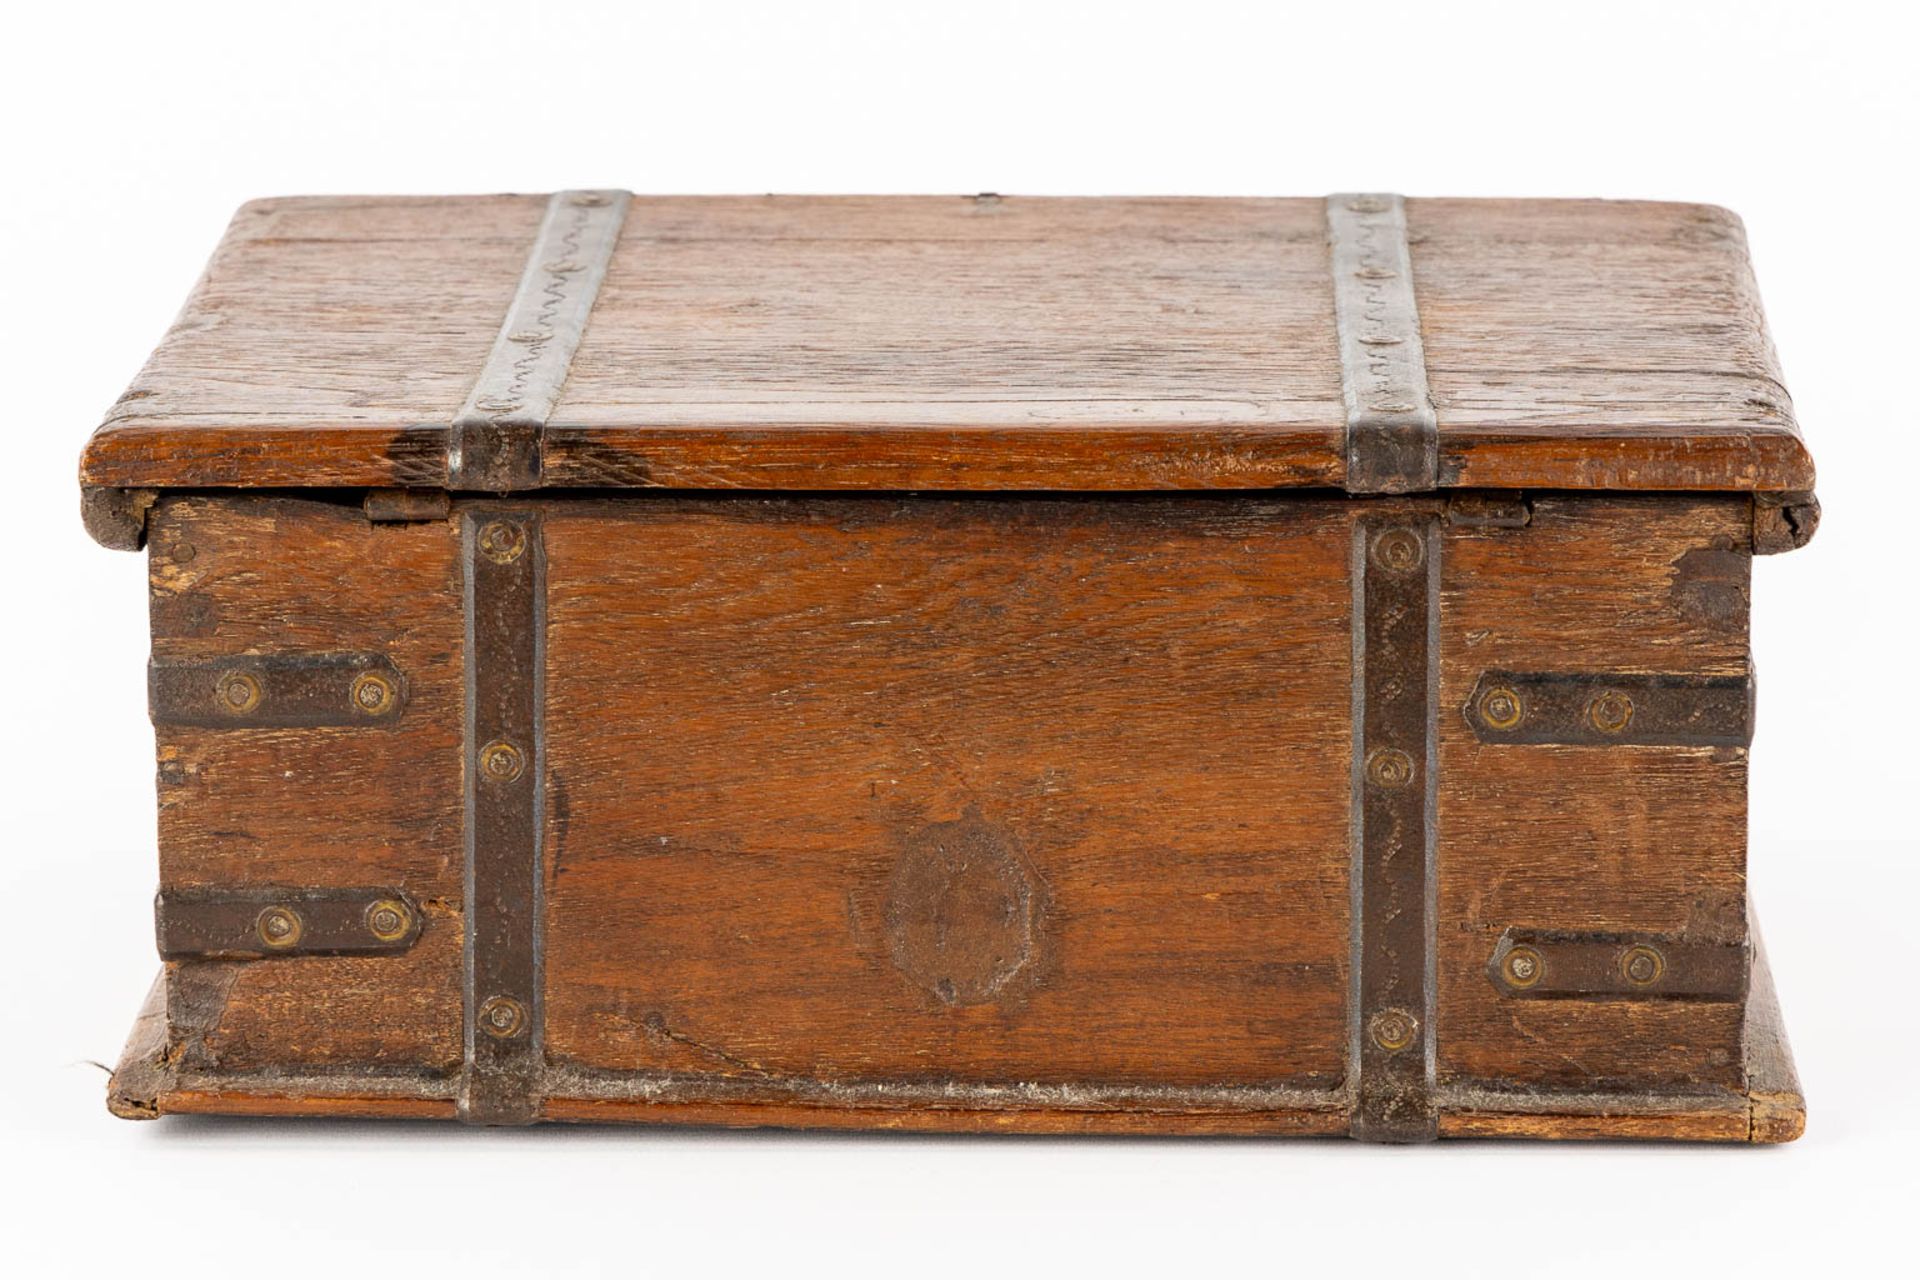 An antique money box or storage chest, oak and wrought iron, 19th C. (L:23 x W:31 x H:13 cm) - Bild 5 aus 13